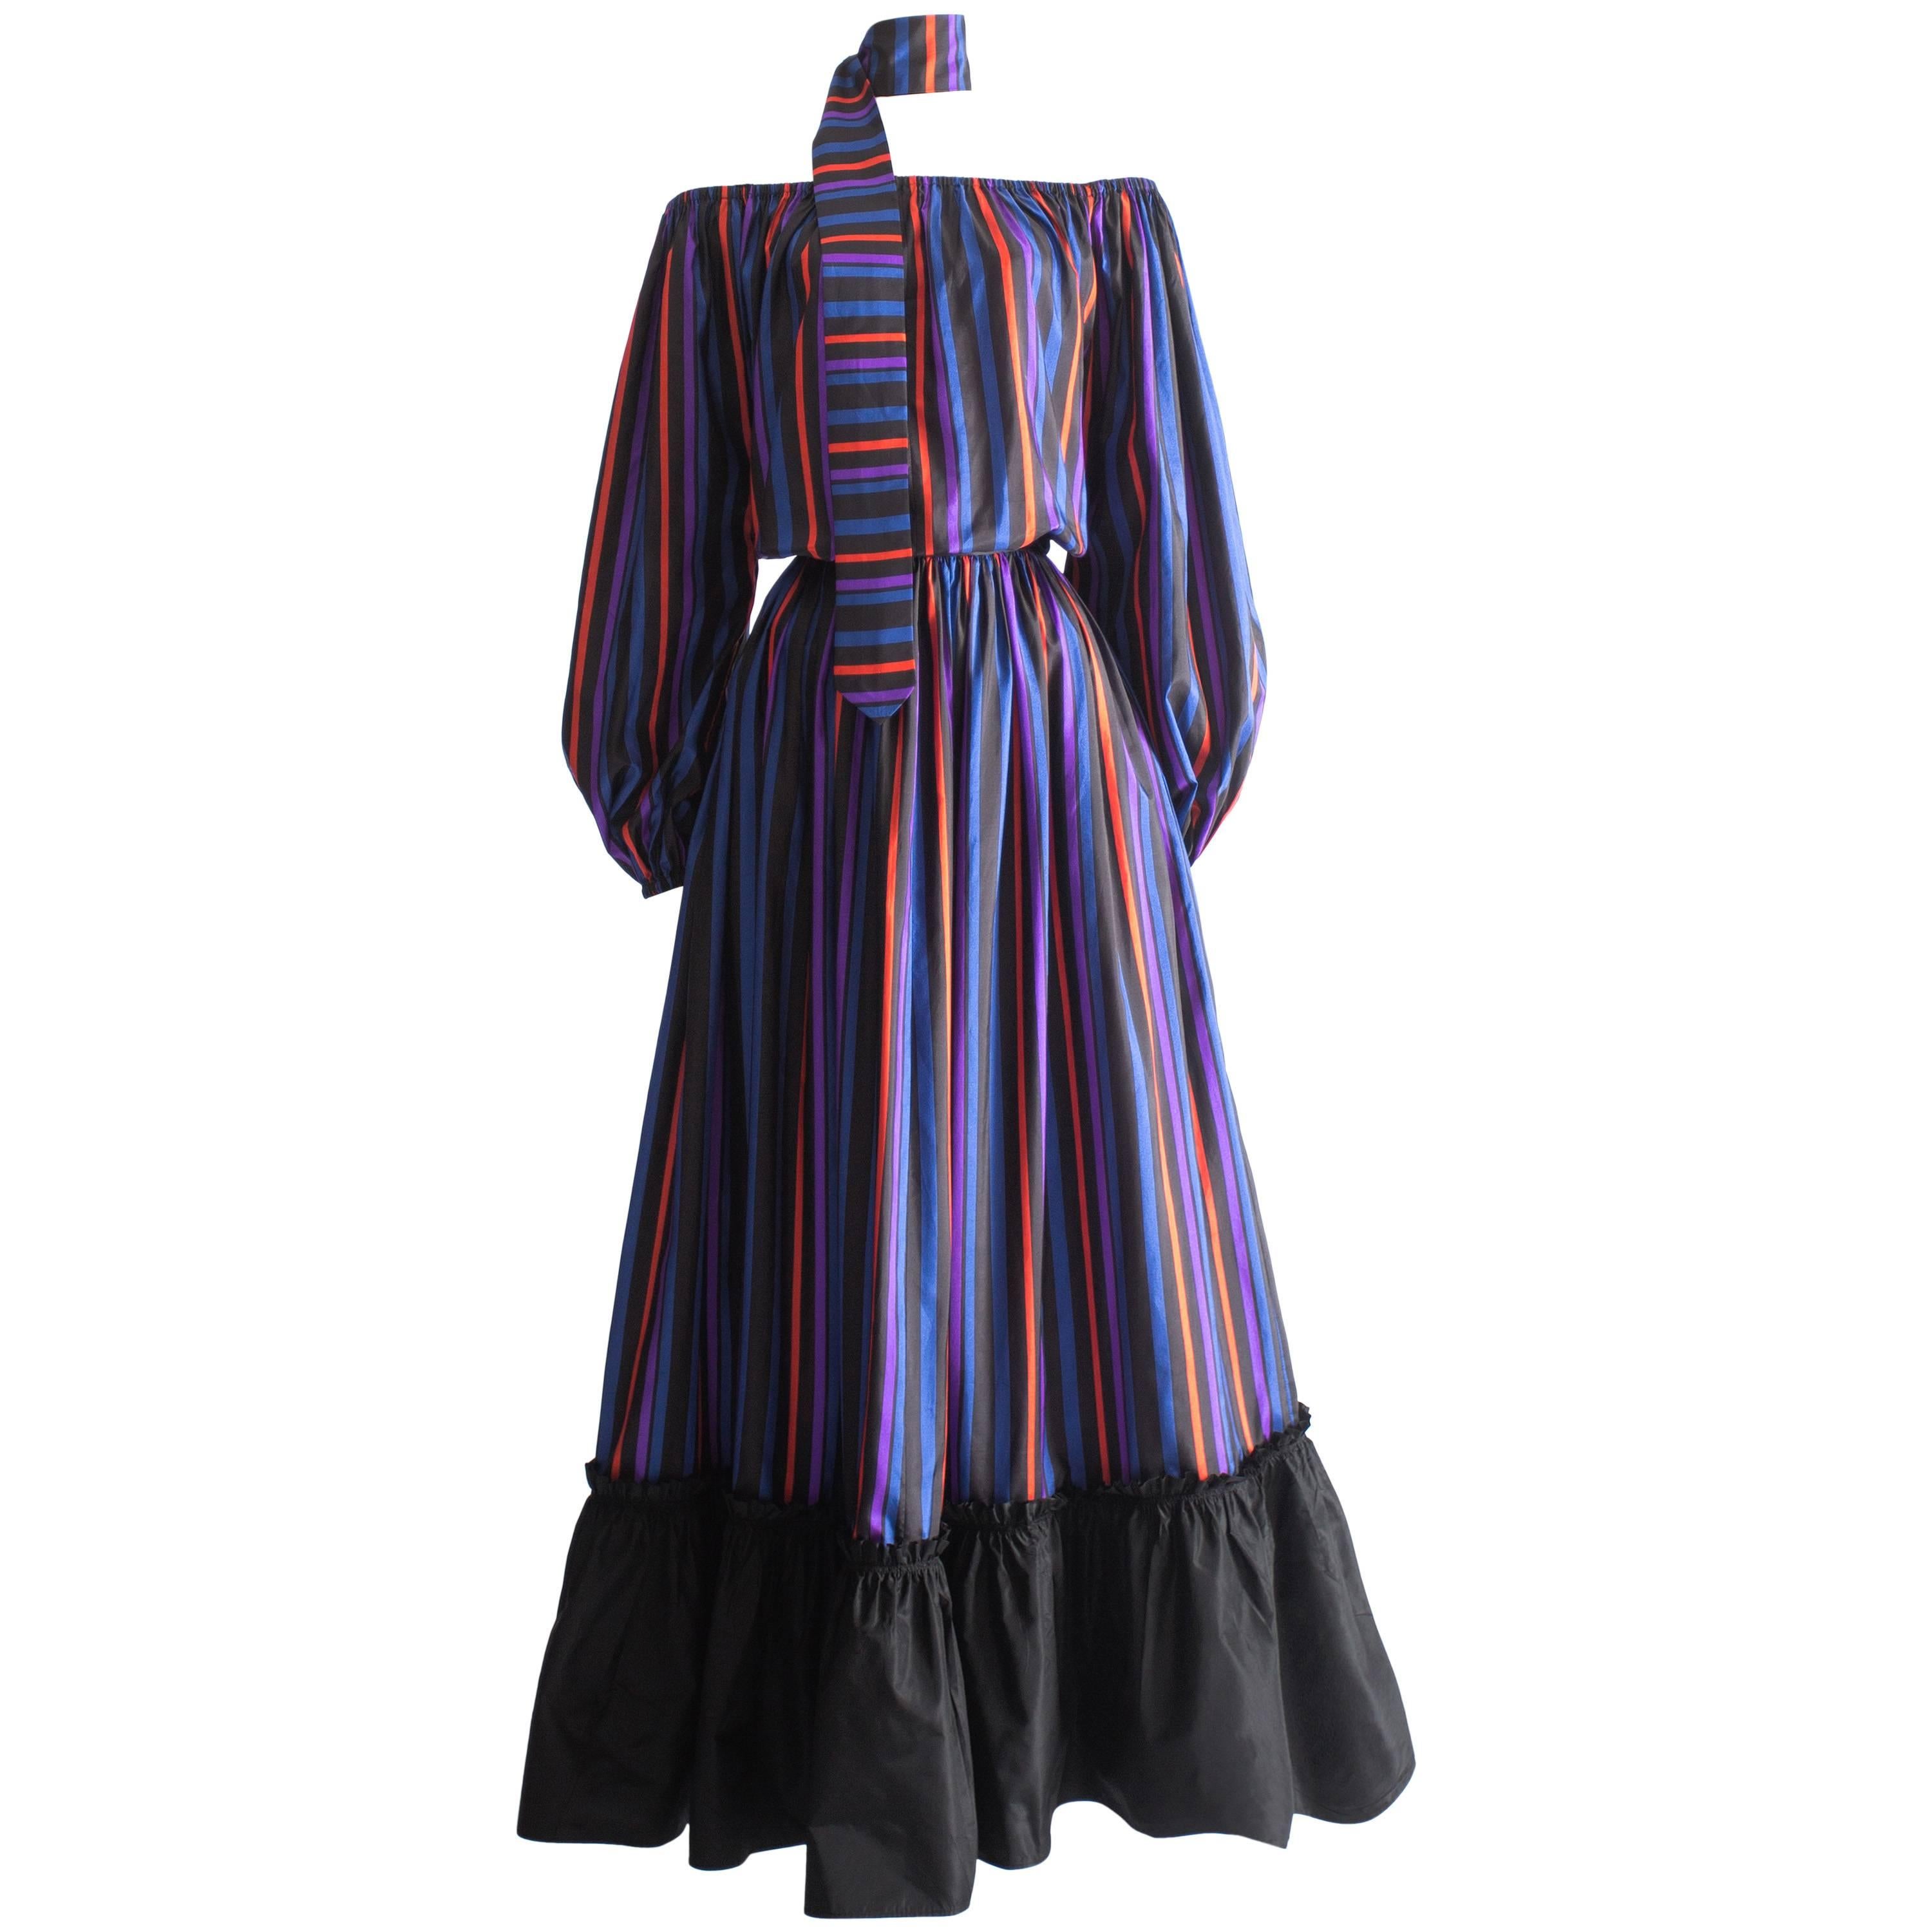 Lanvin Haute Couture silk taffeta off-the-shoulder evening dress, circa 1976